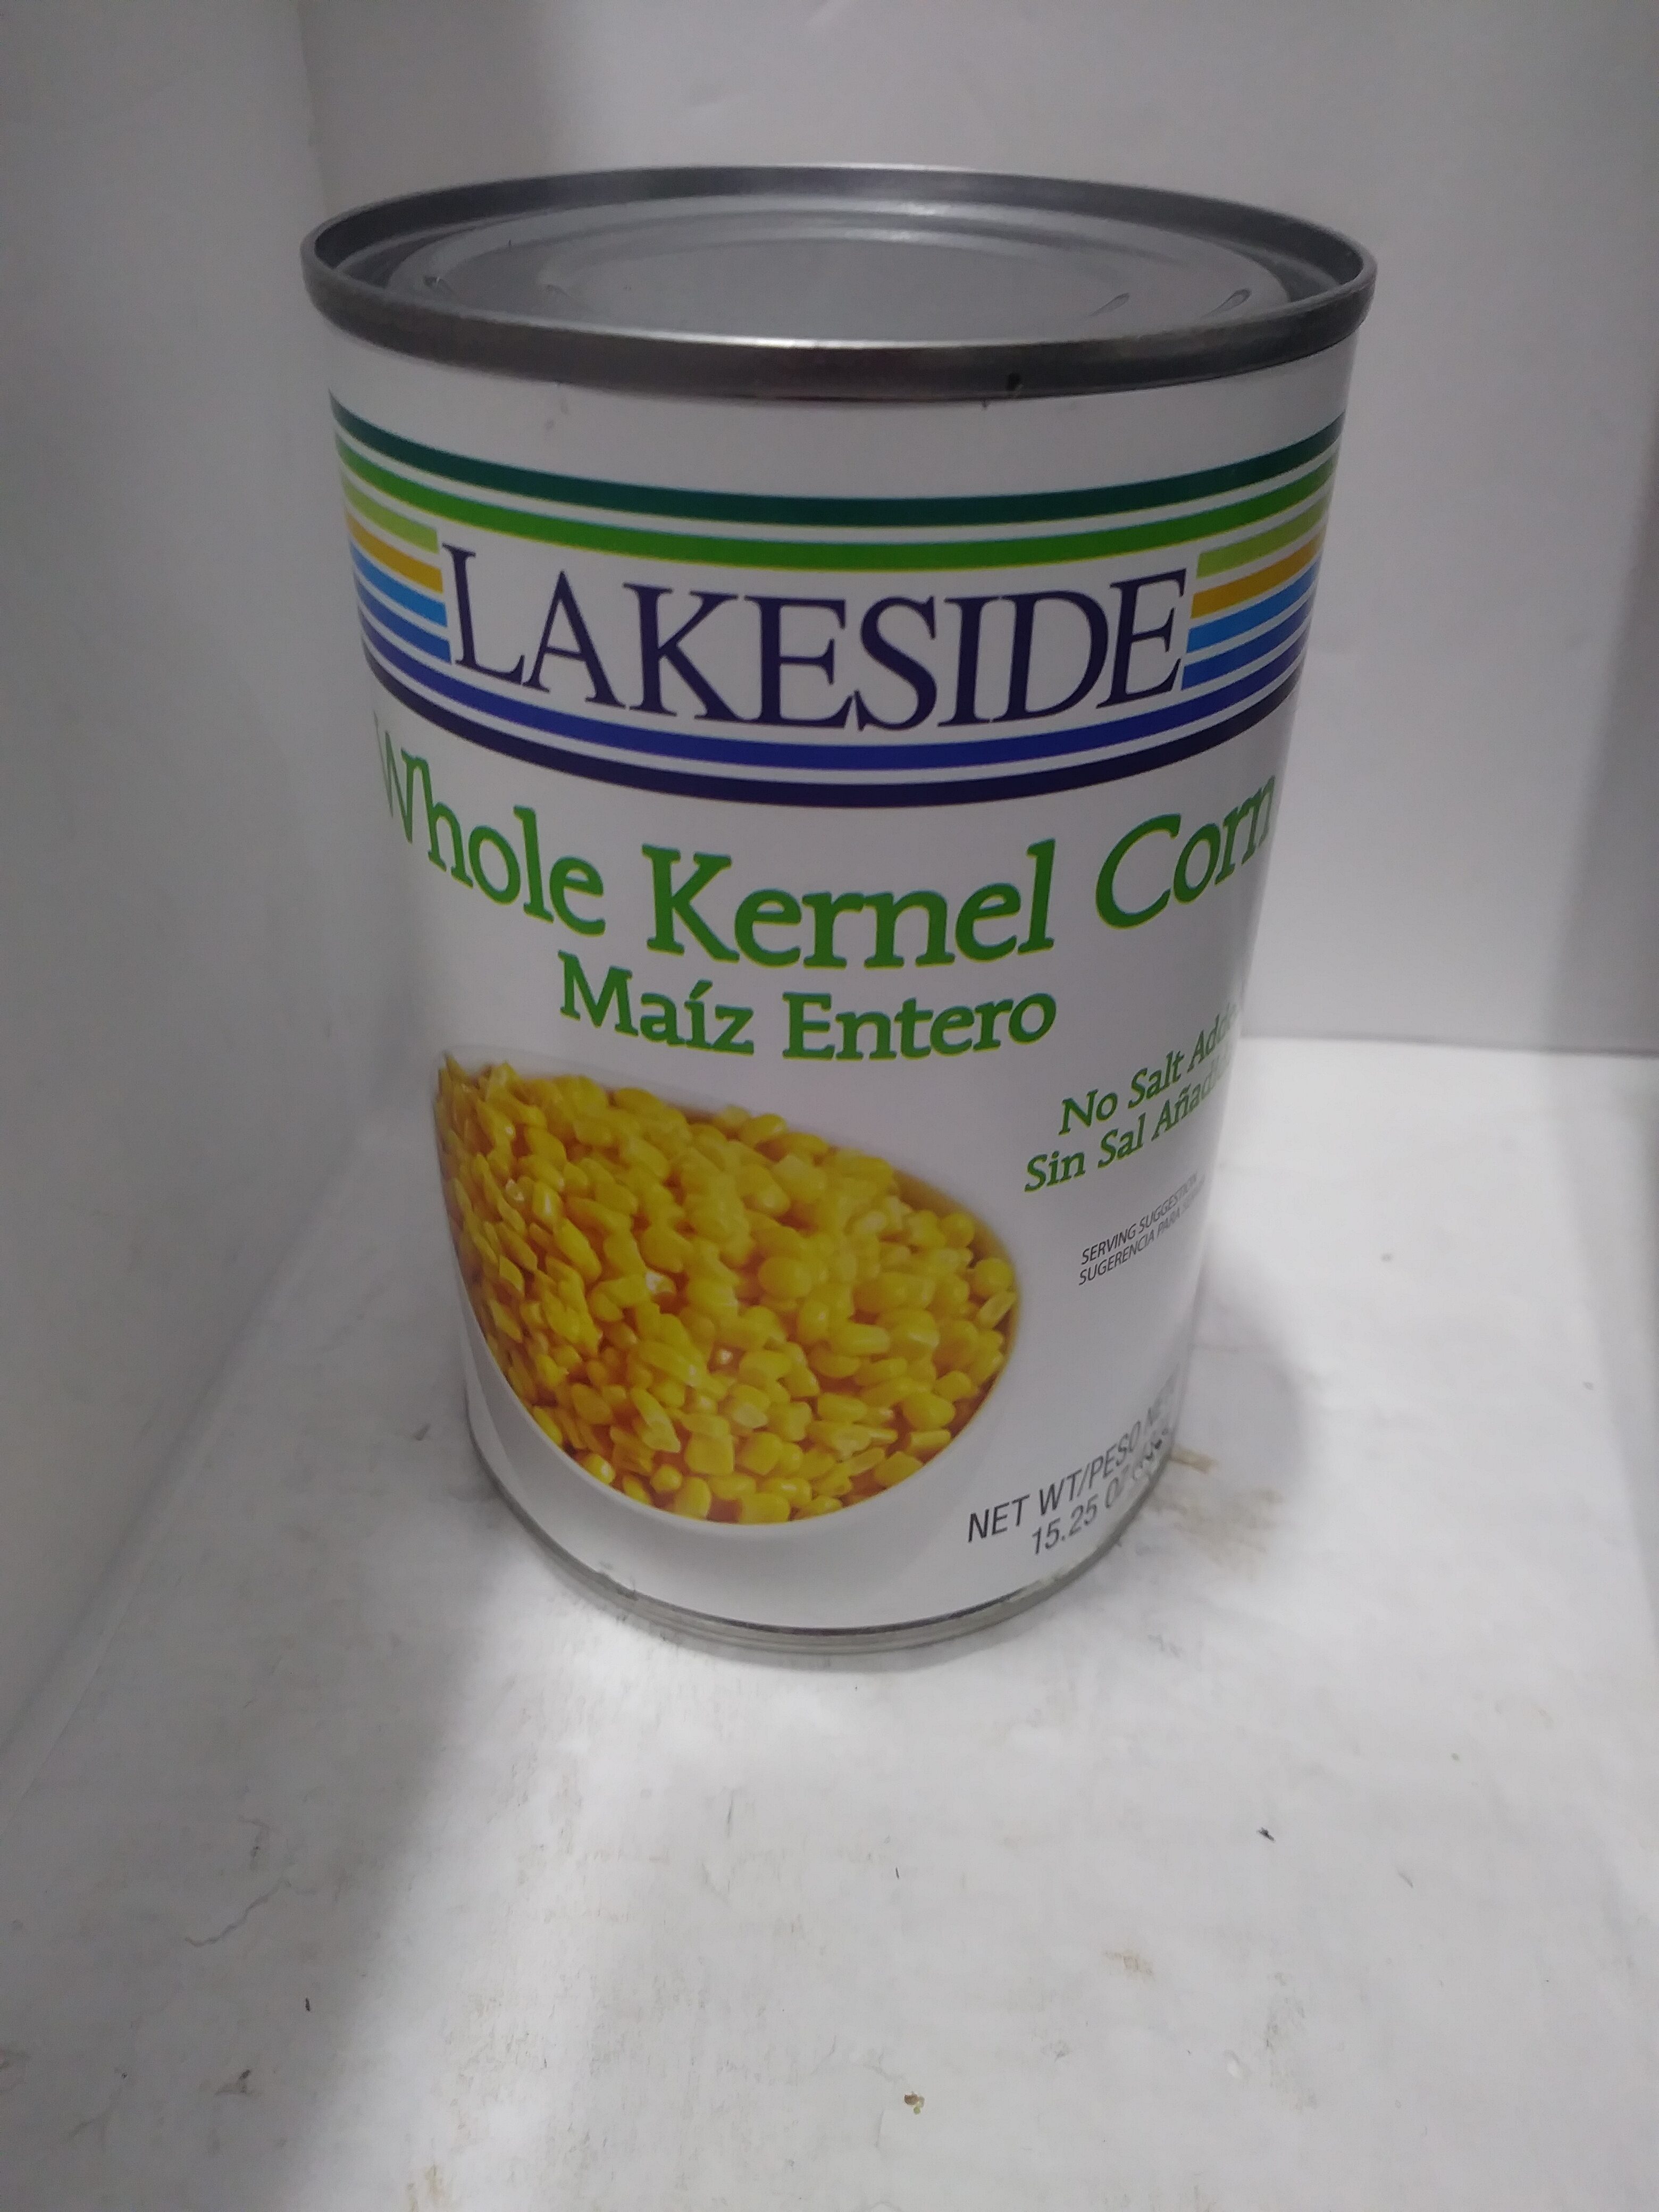 Corn, Whole Kernel - Ingredients - en